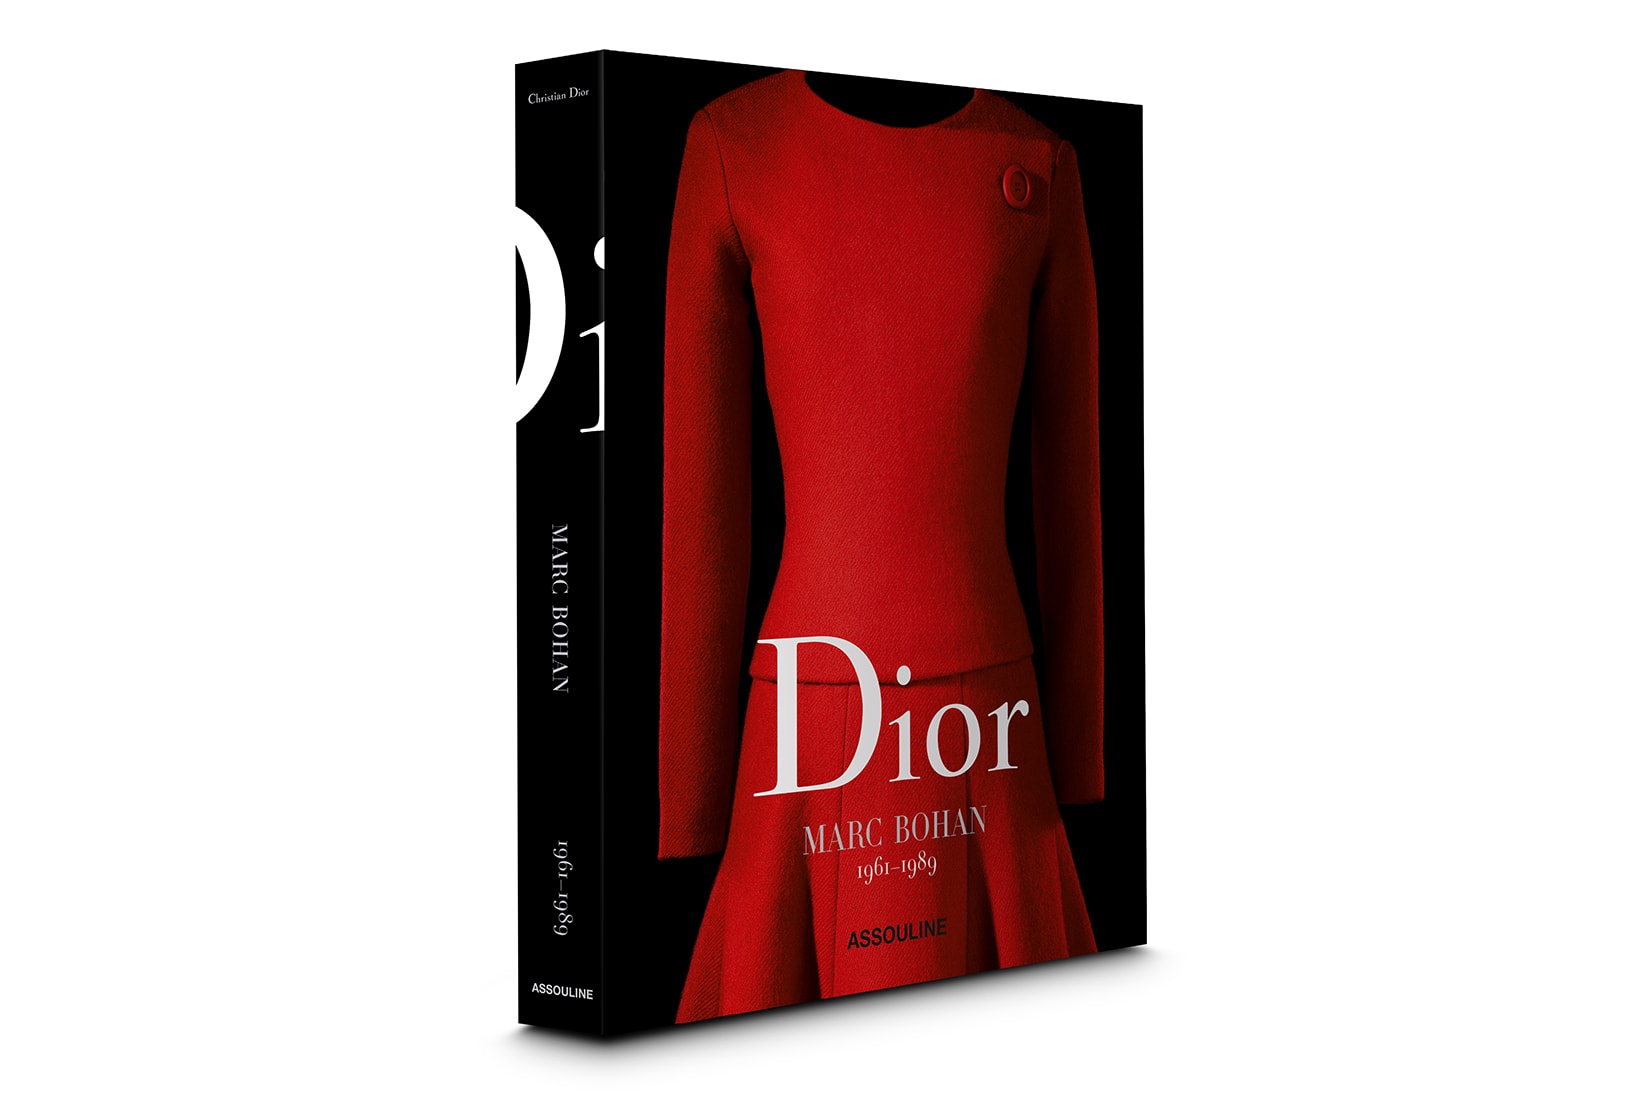 Dior Marc Bohan Anthology Book Fashion Print Couture Assouline